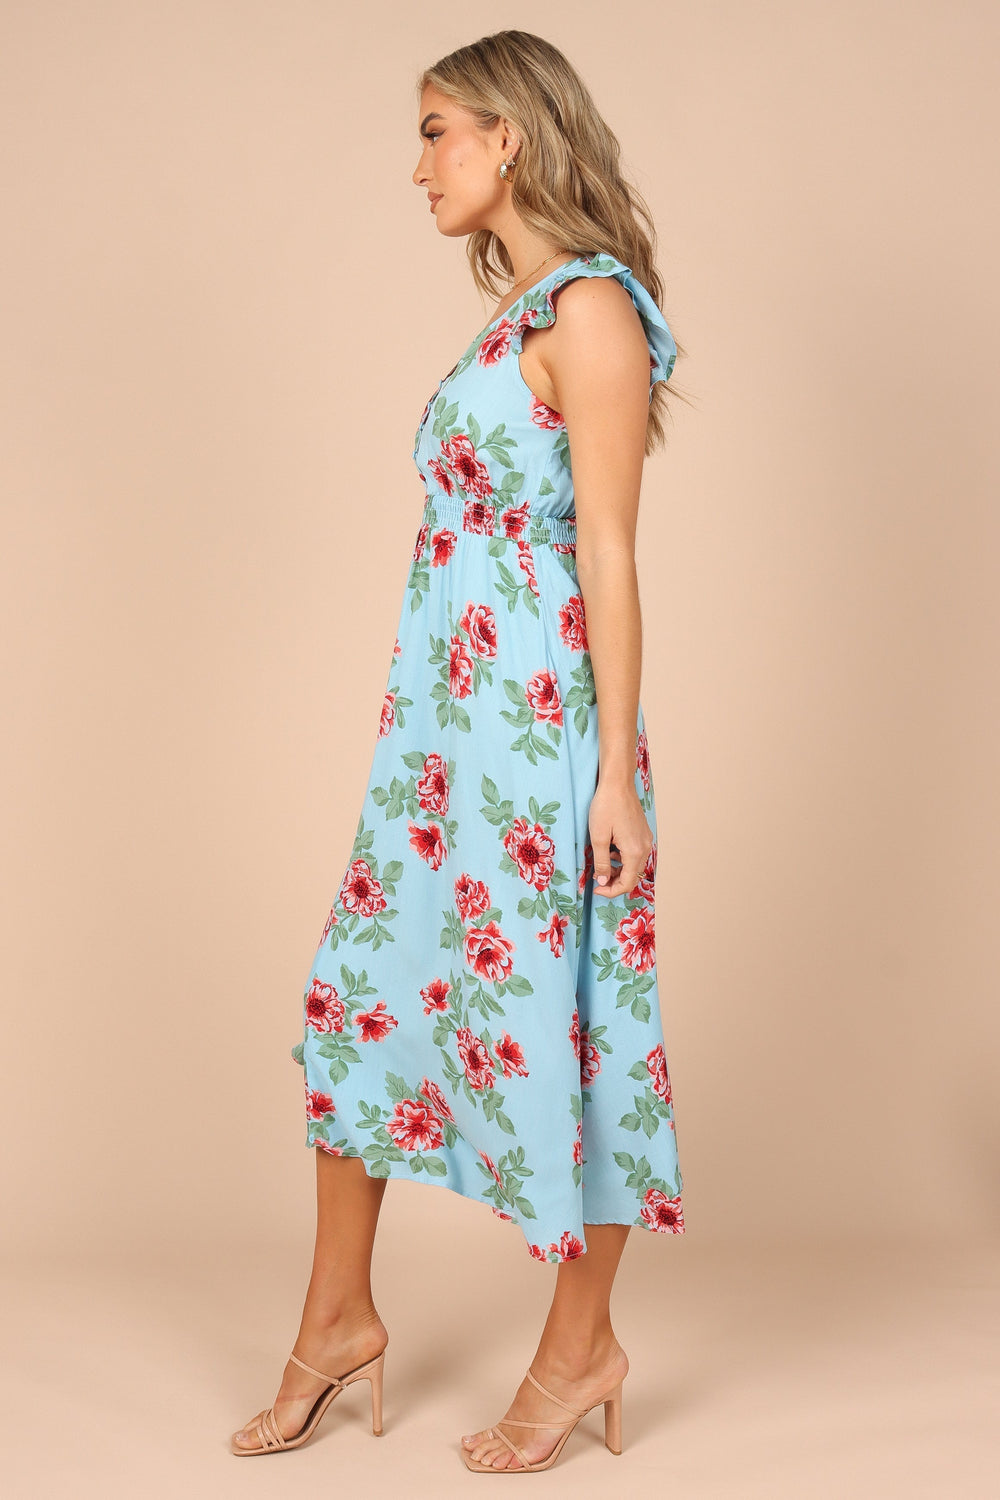 Petal and Pup USA DRESSES Cassatt Frill Cap Sleeve Maxi Dress - Blue Floral